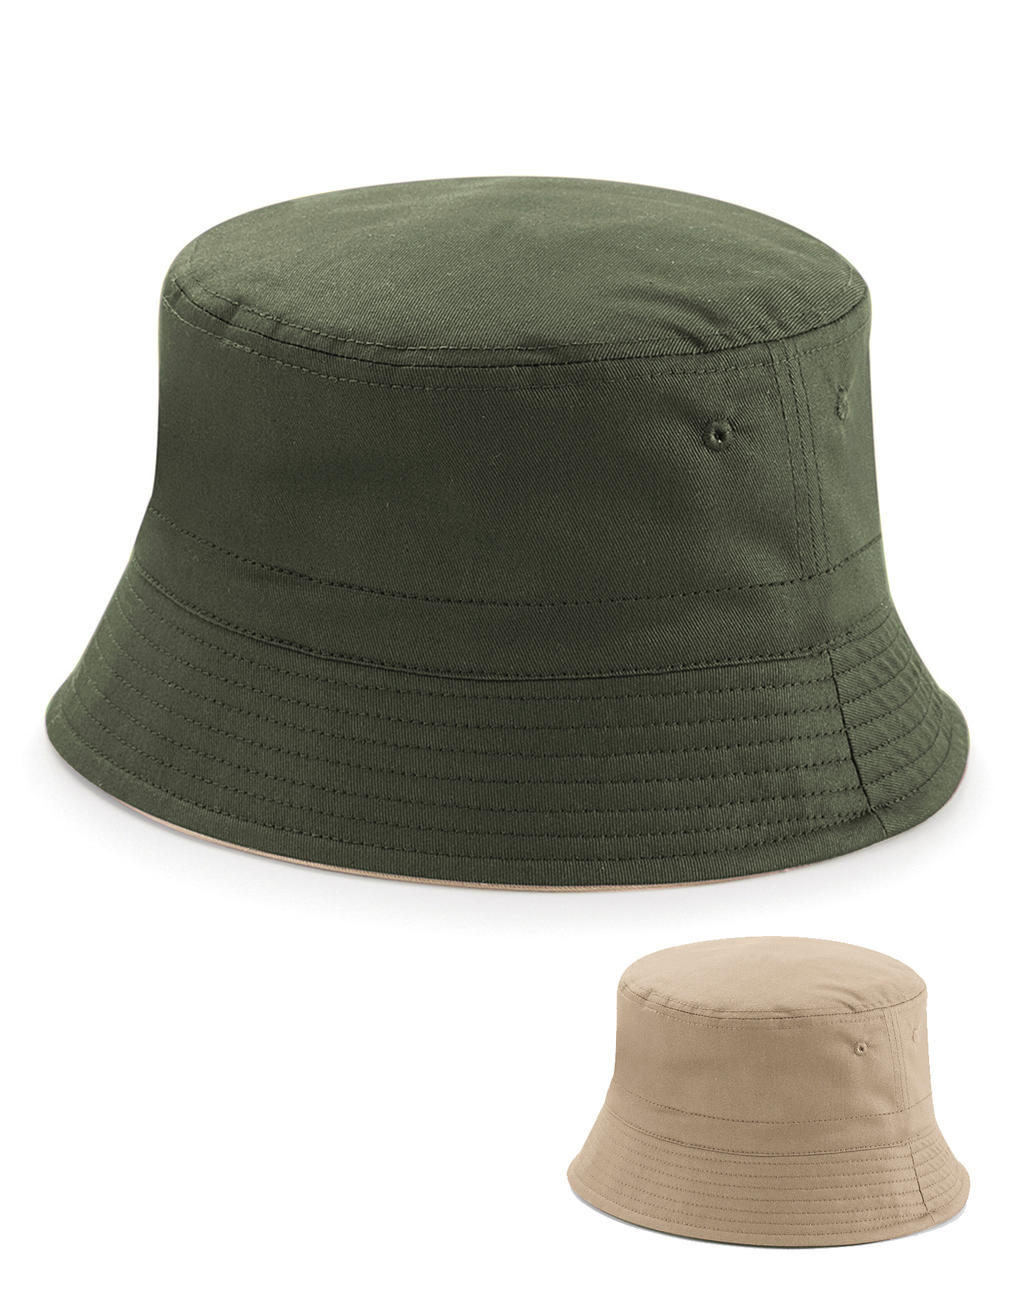  Reversible Bucket Hat in Farbe Black/Light Grey